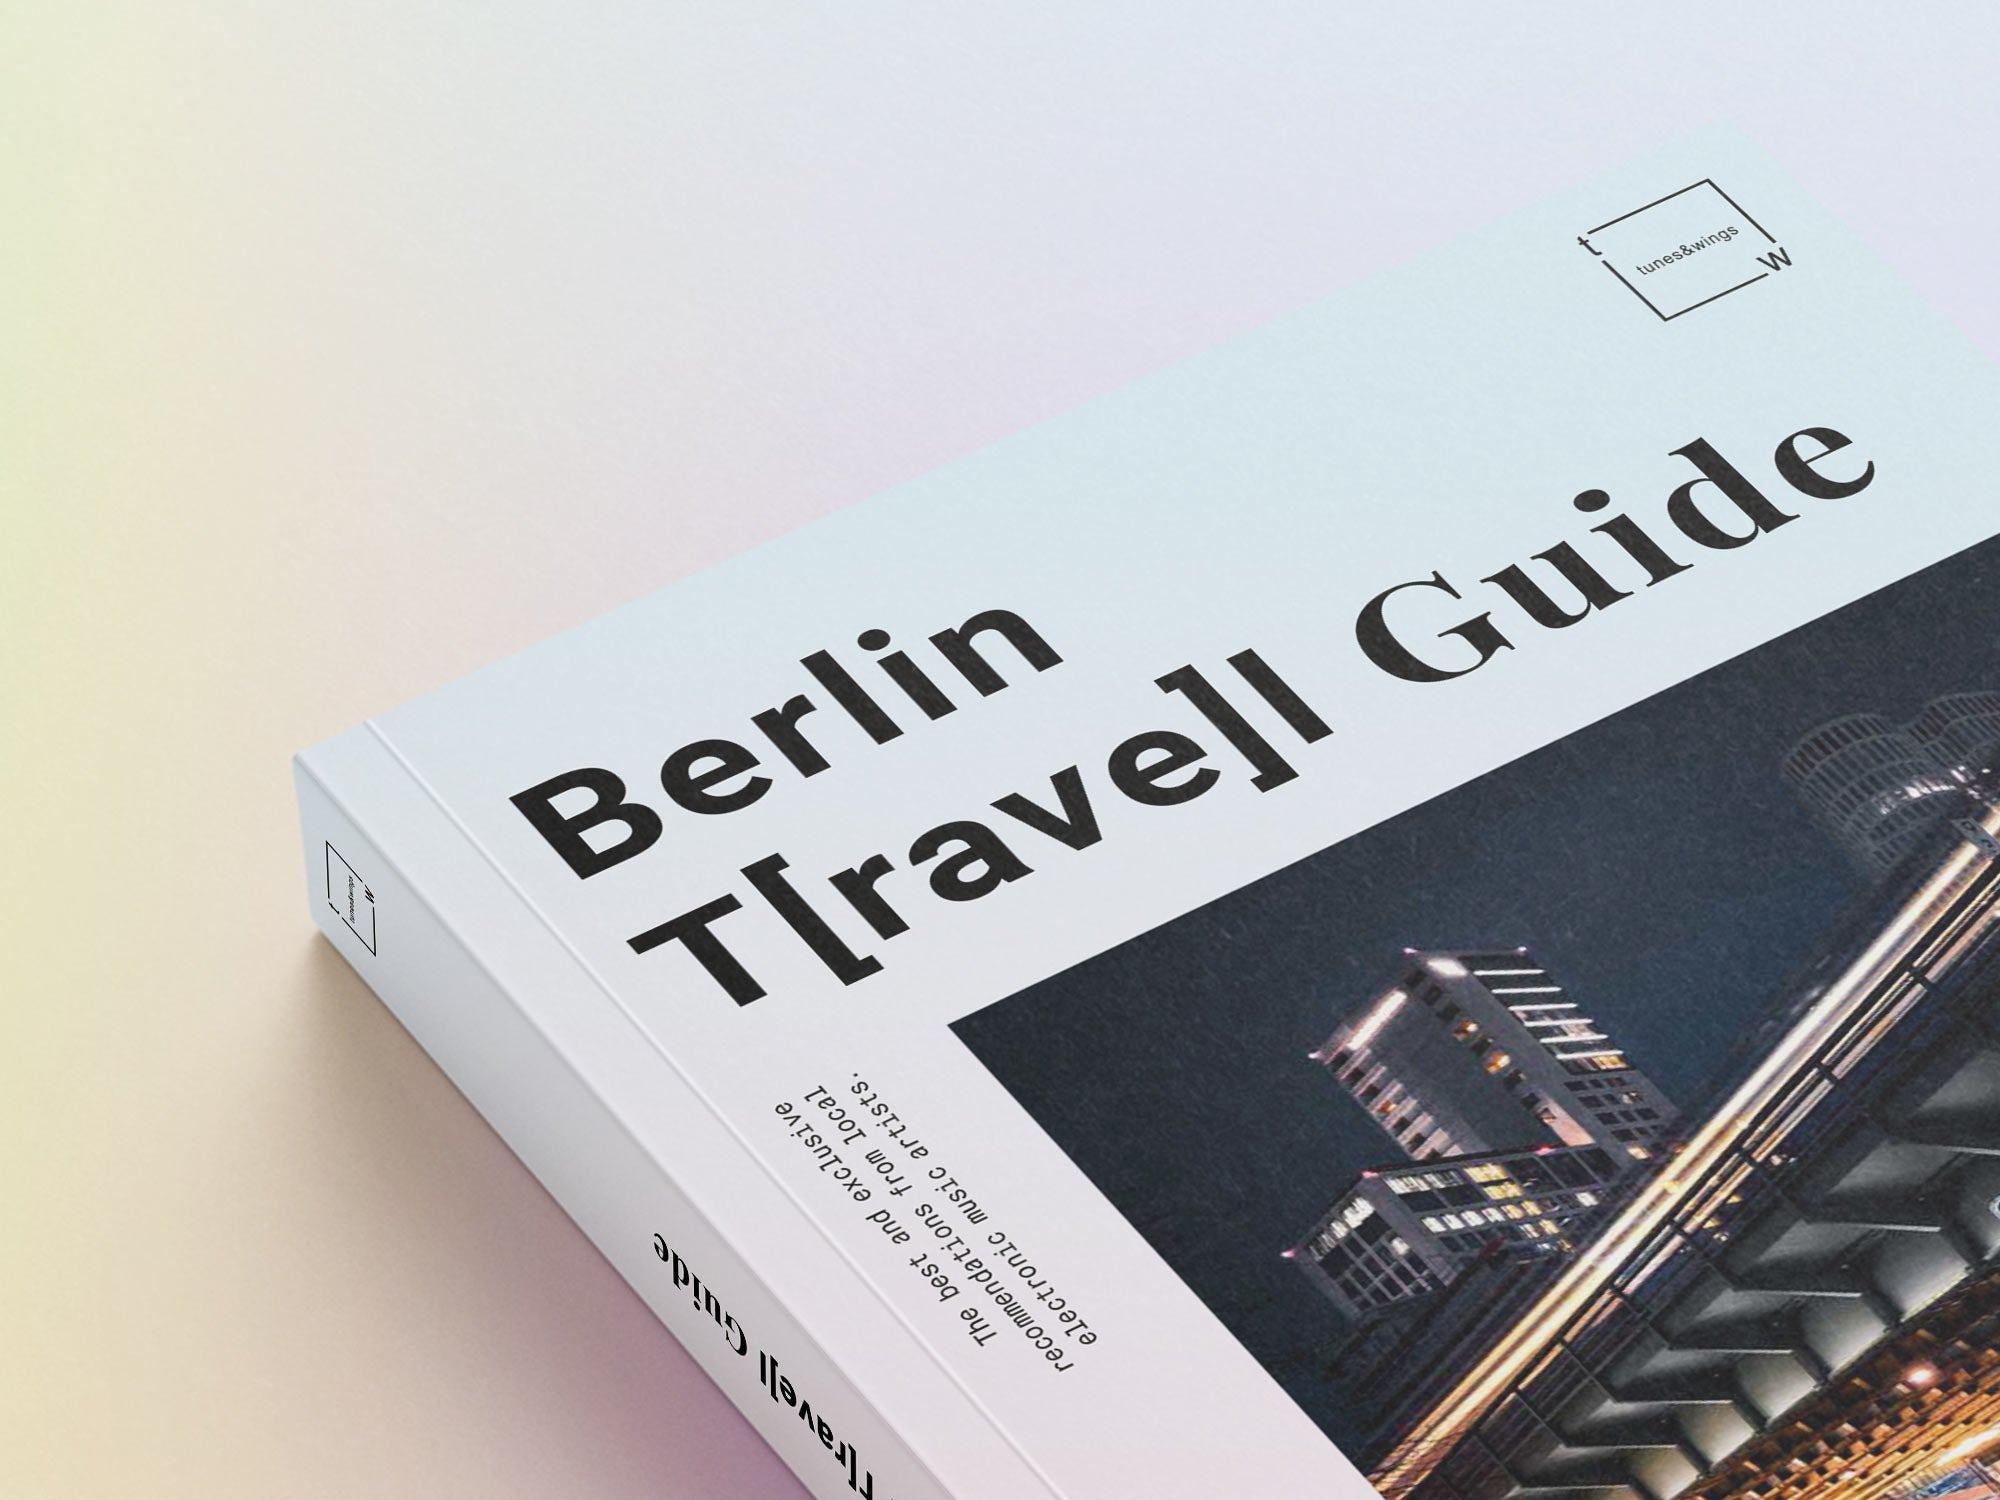 Berlin T[rave]l Guide